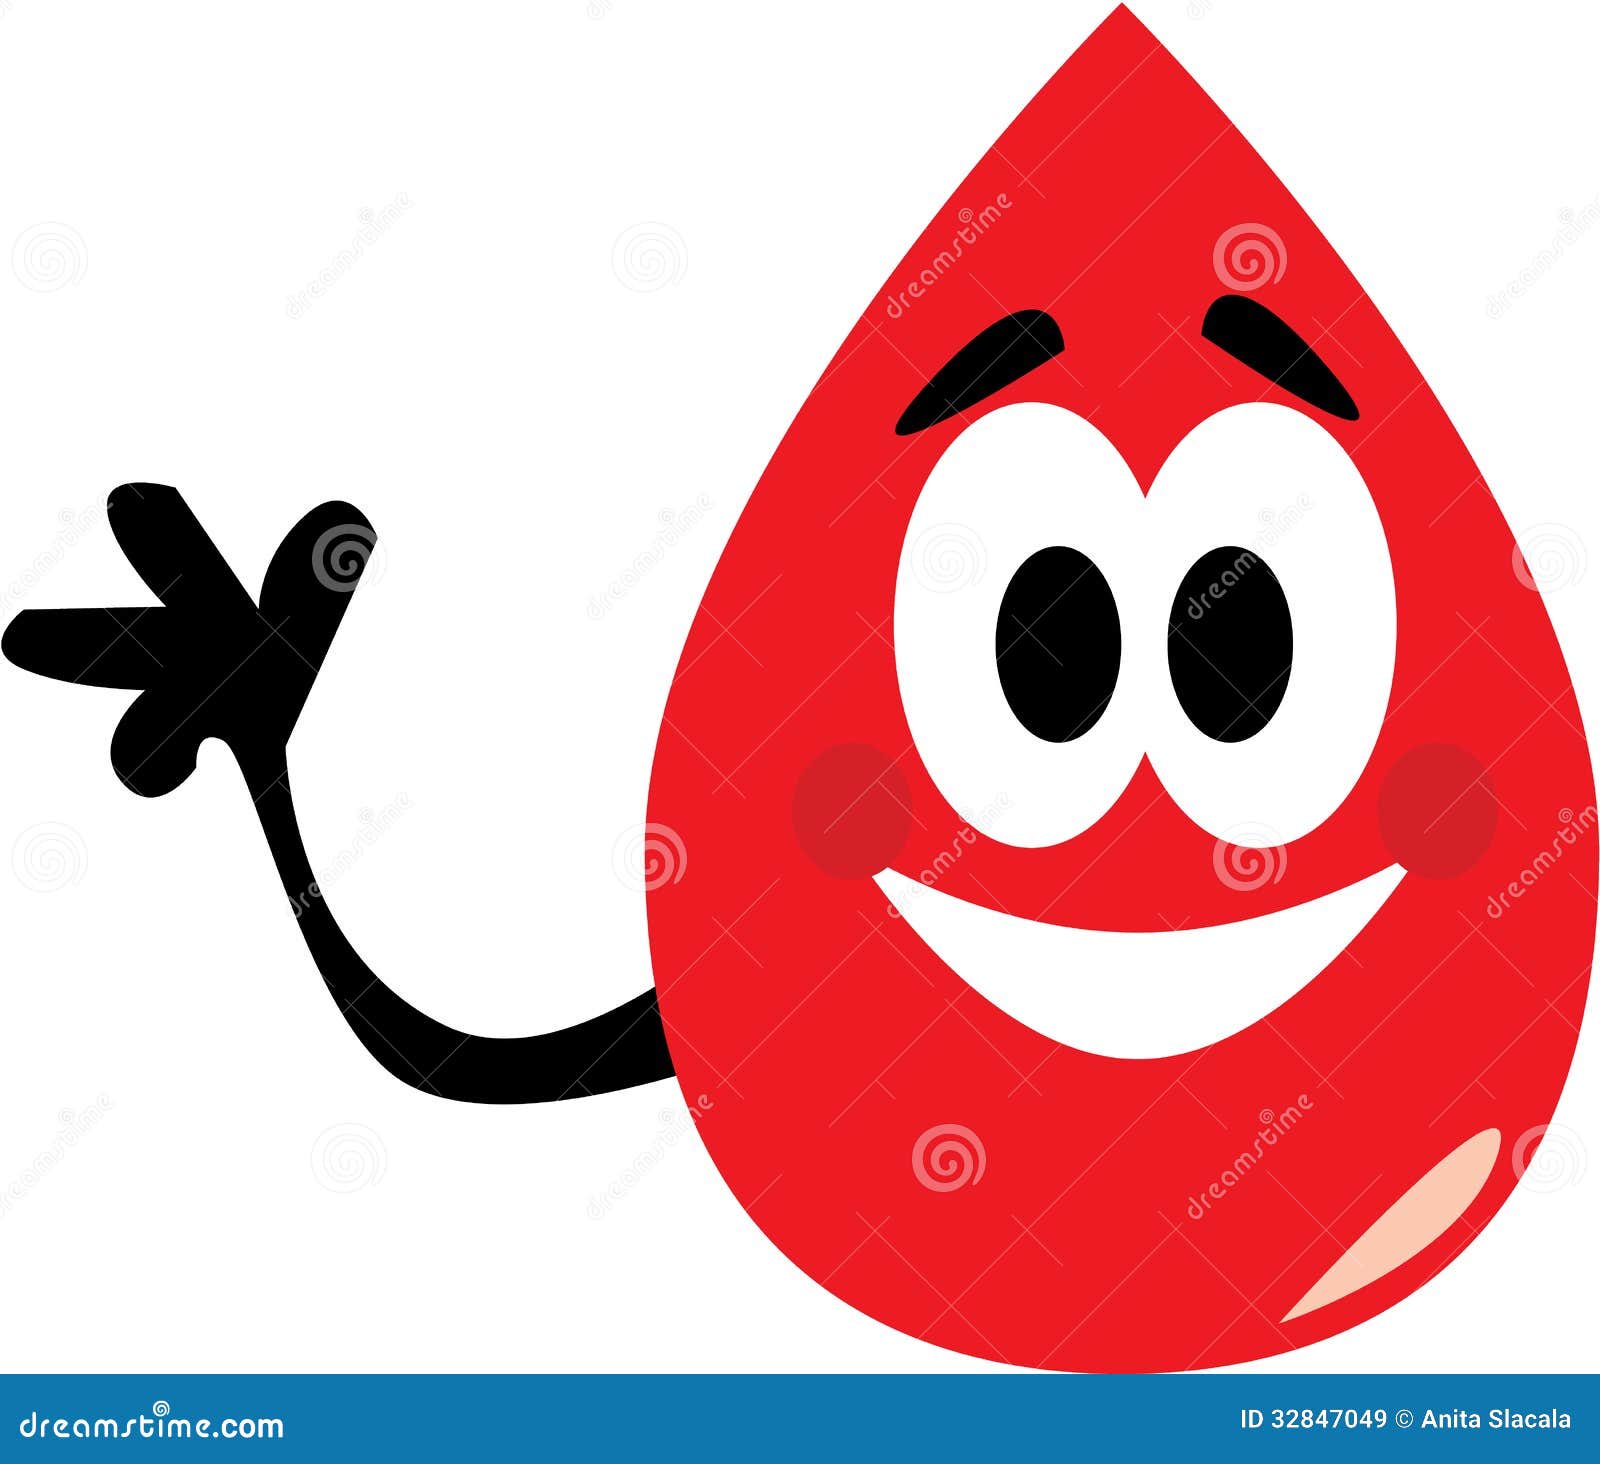 clipart blood transfusion - photo #17